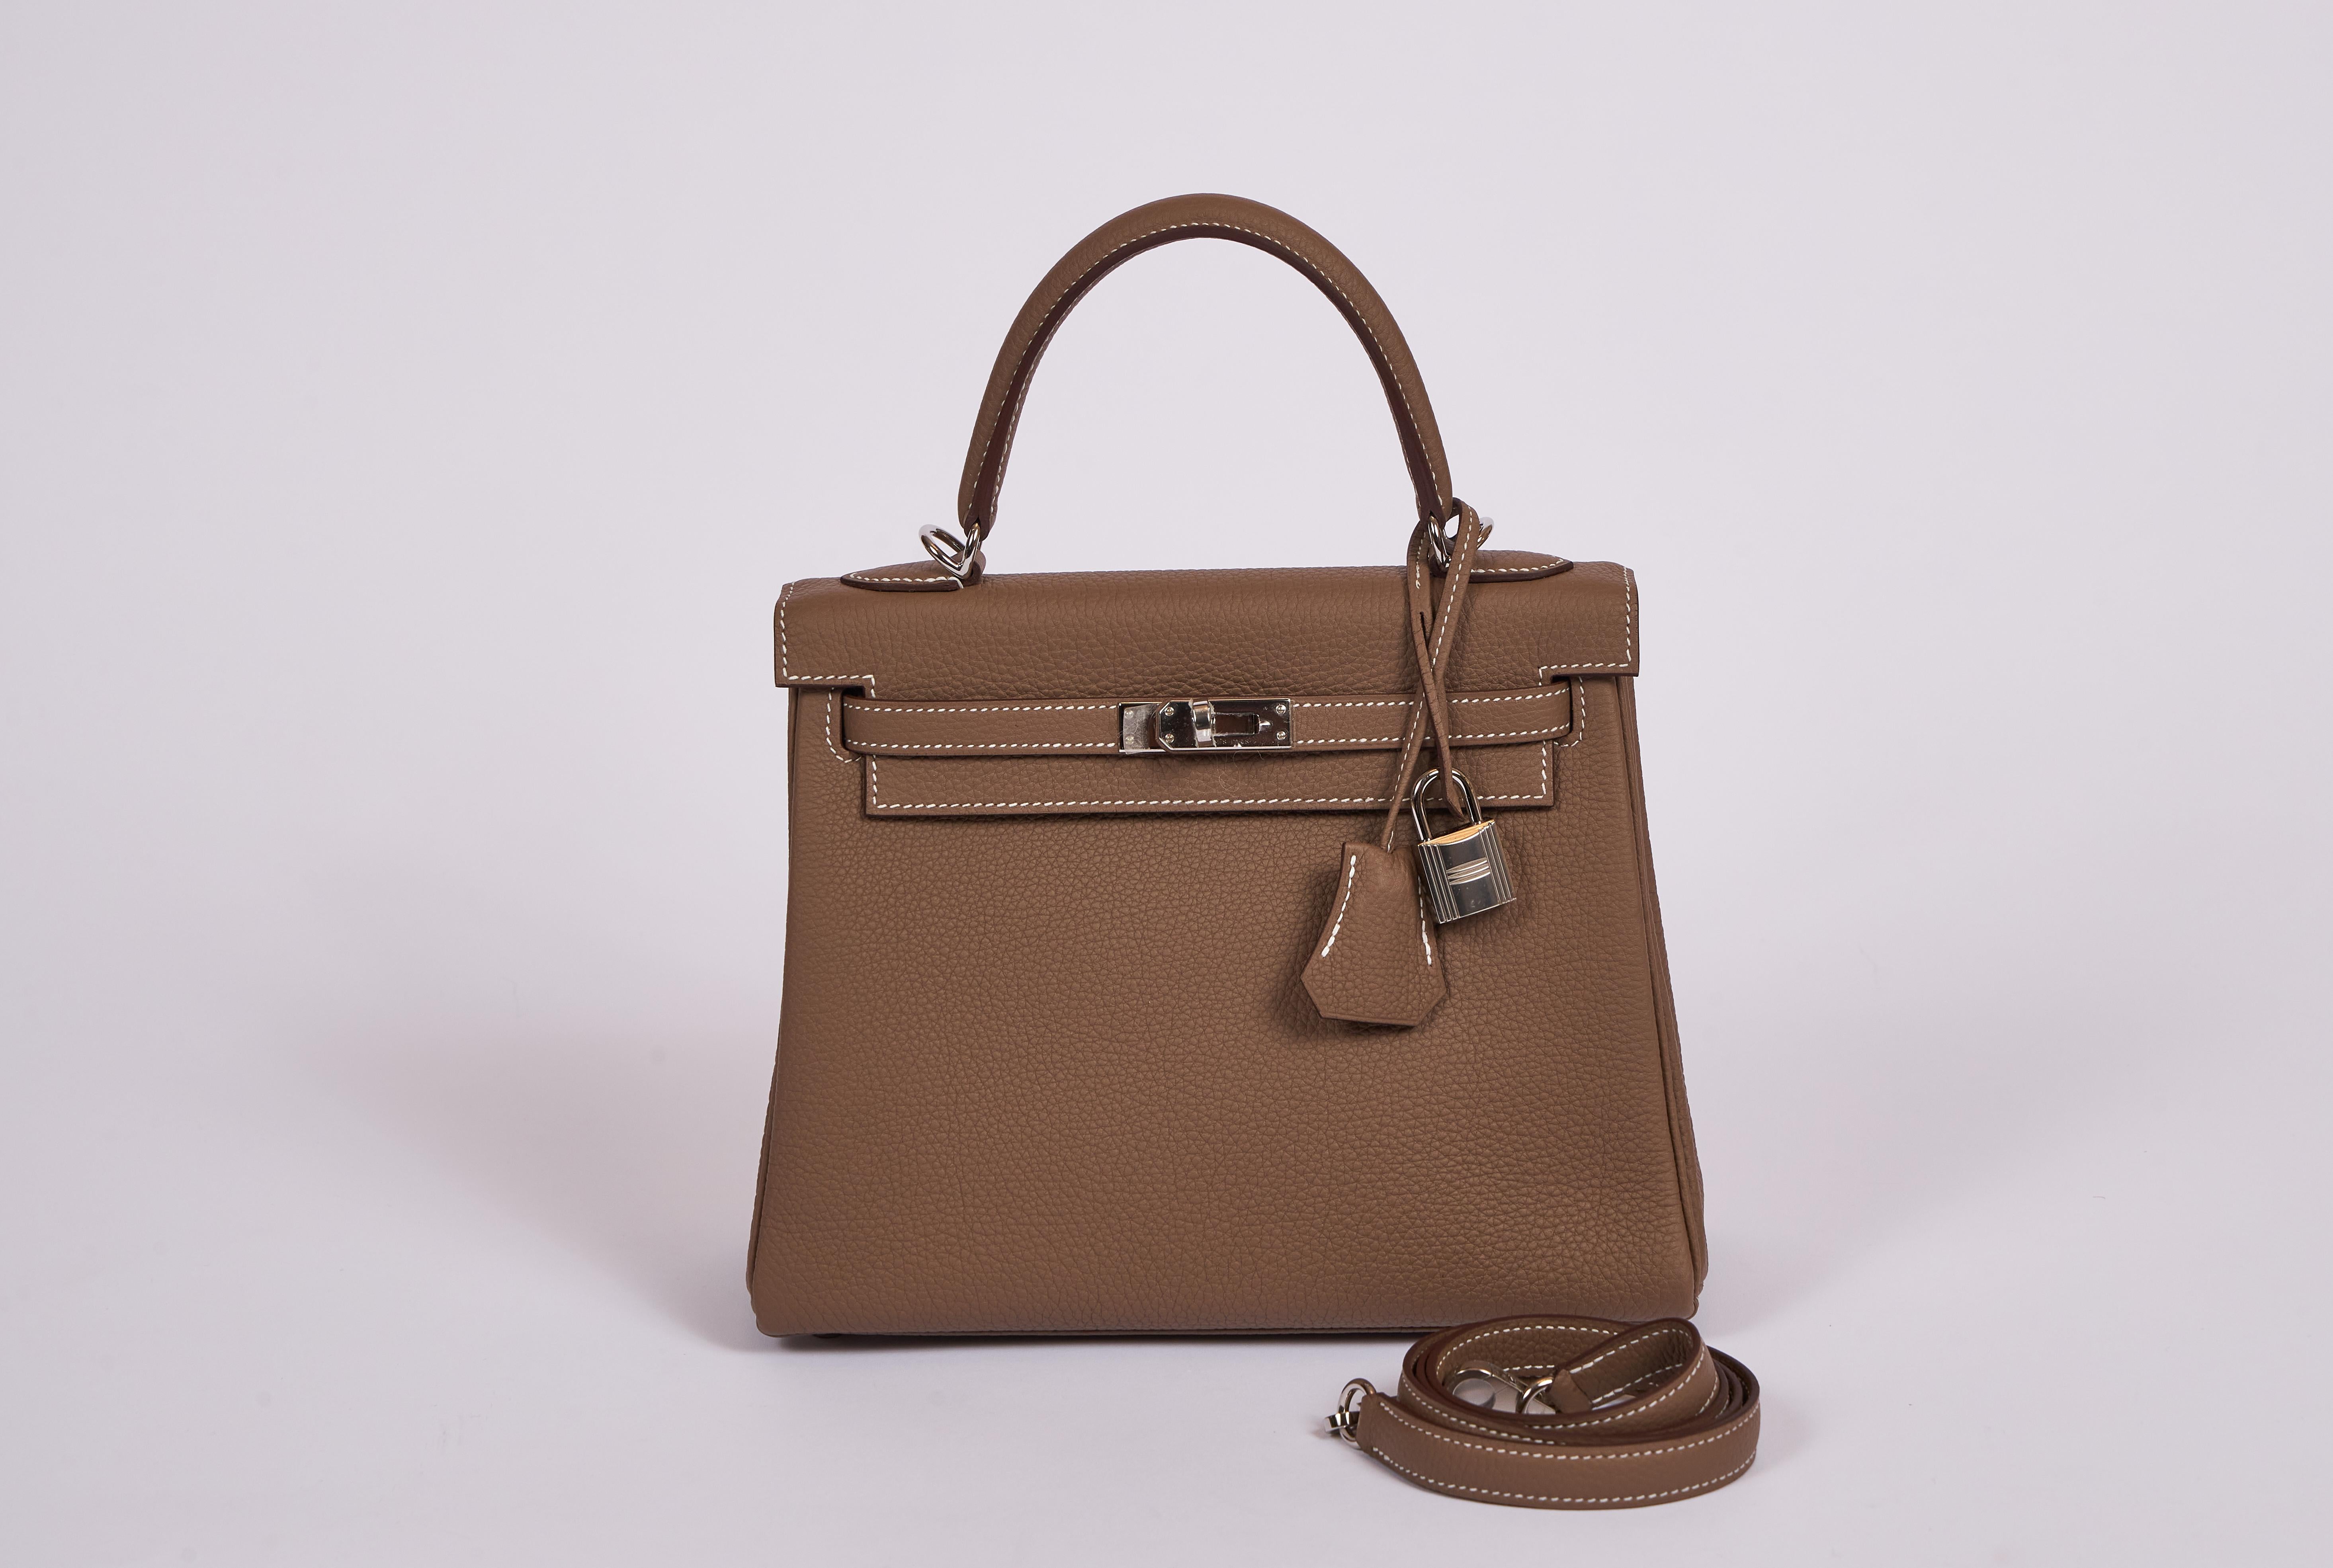 Hermès 25cm Kelly Retourne in etoupe togo leather with palladium hardware. Handle drop, 3.25